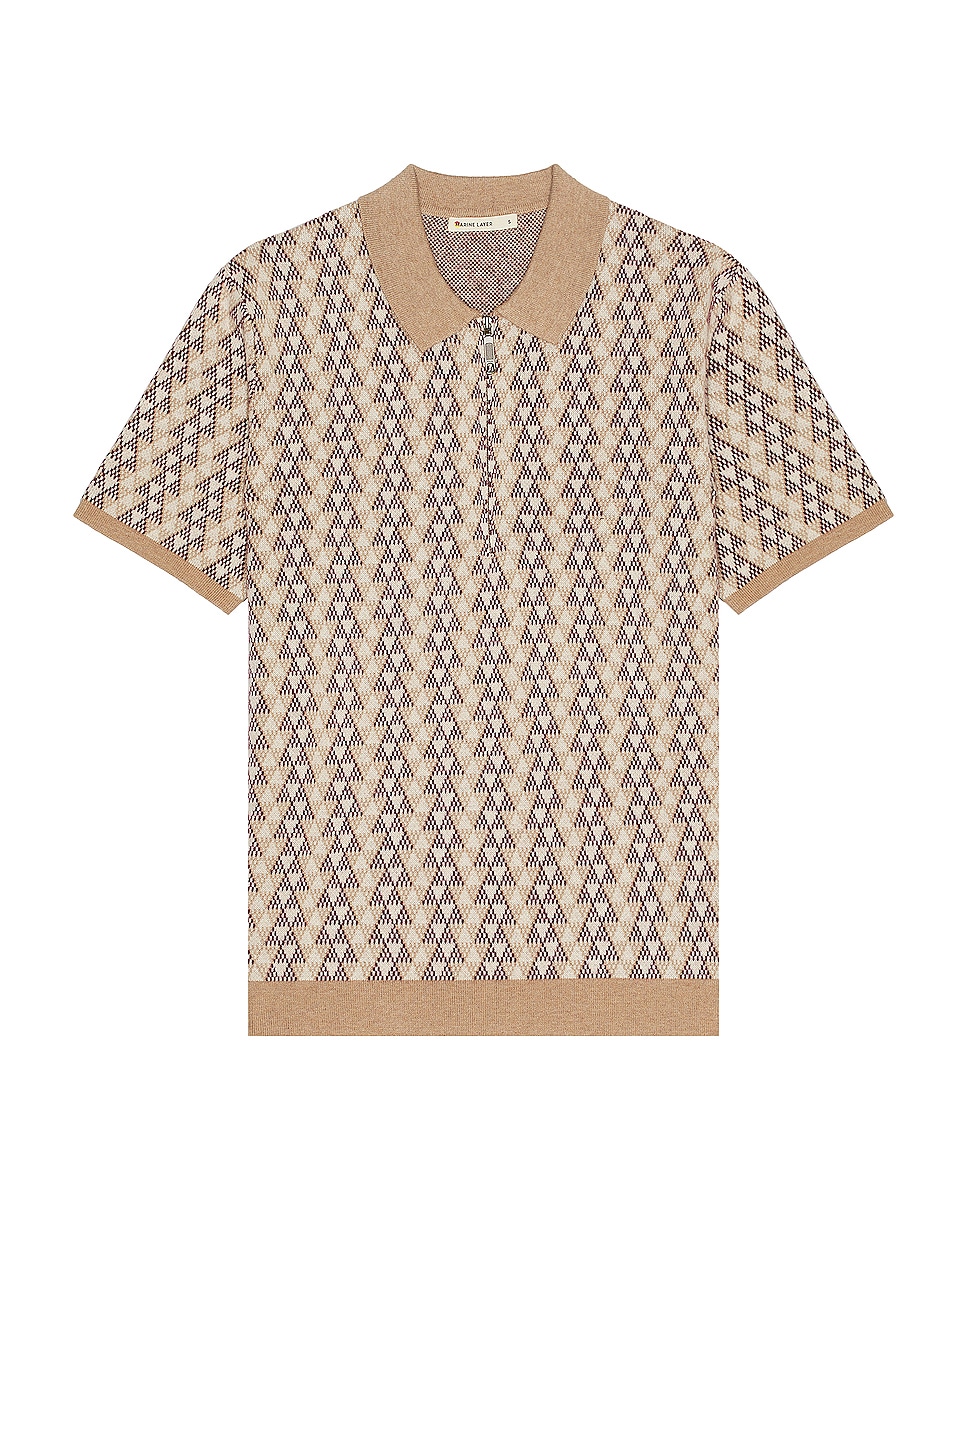 Louis Vuitton Rainbow Monogram Short-sleeved Denim Shirt Indigo Blue